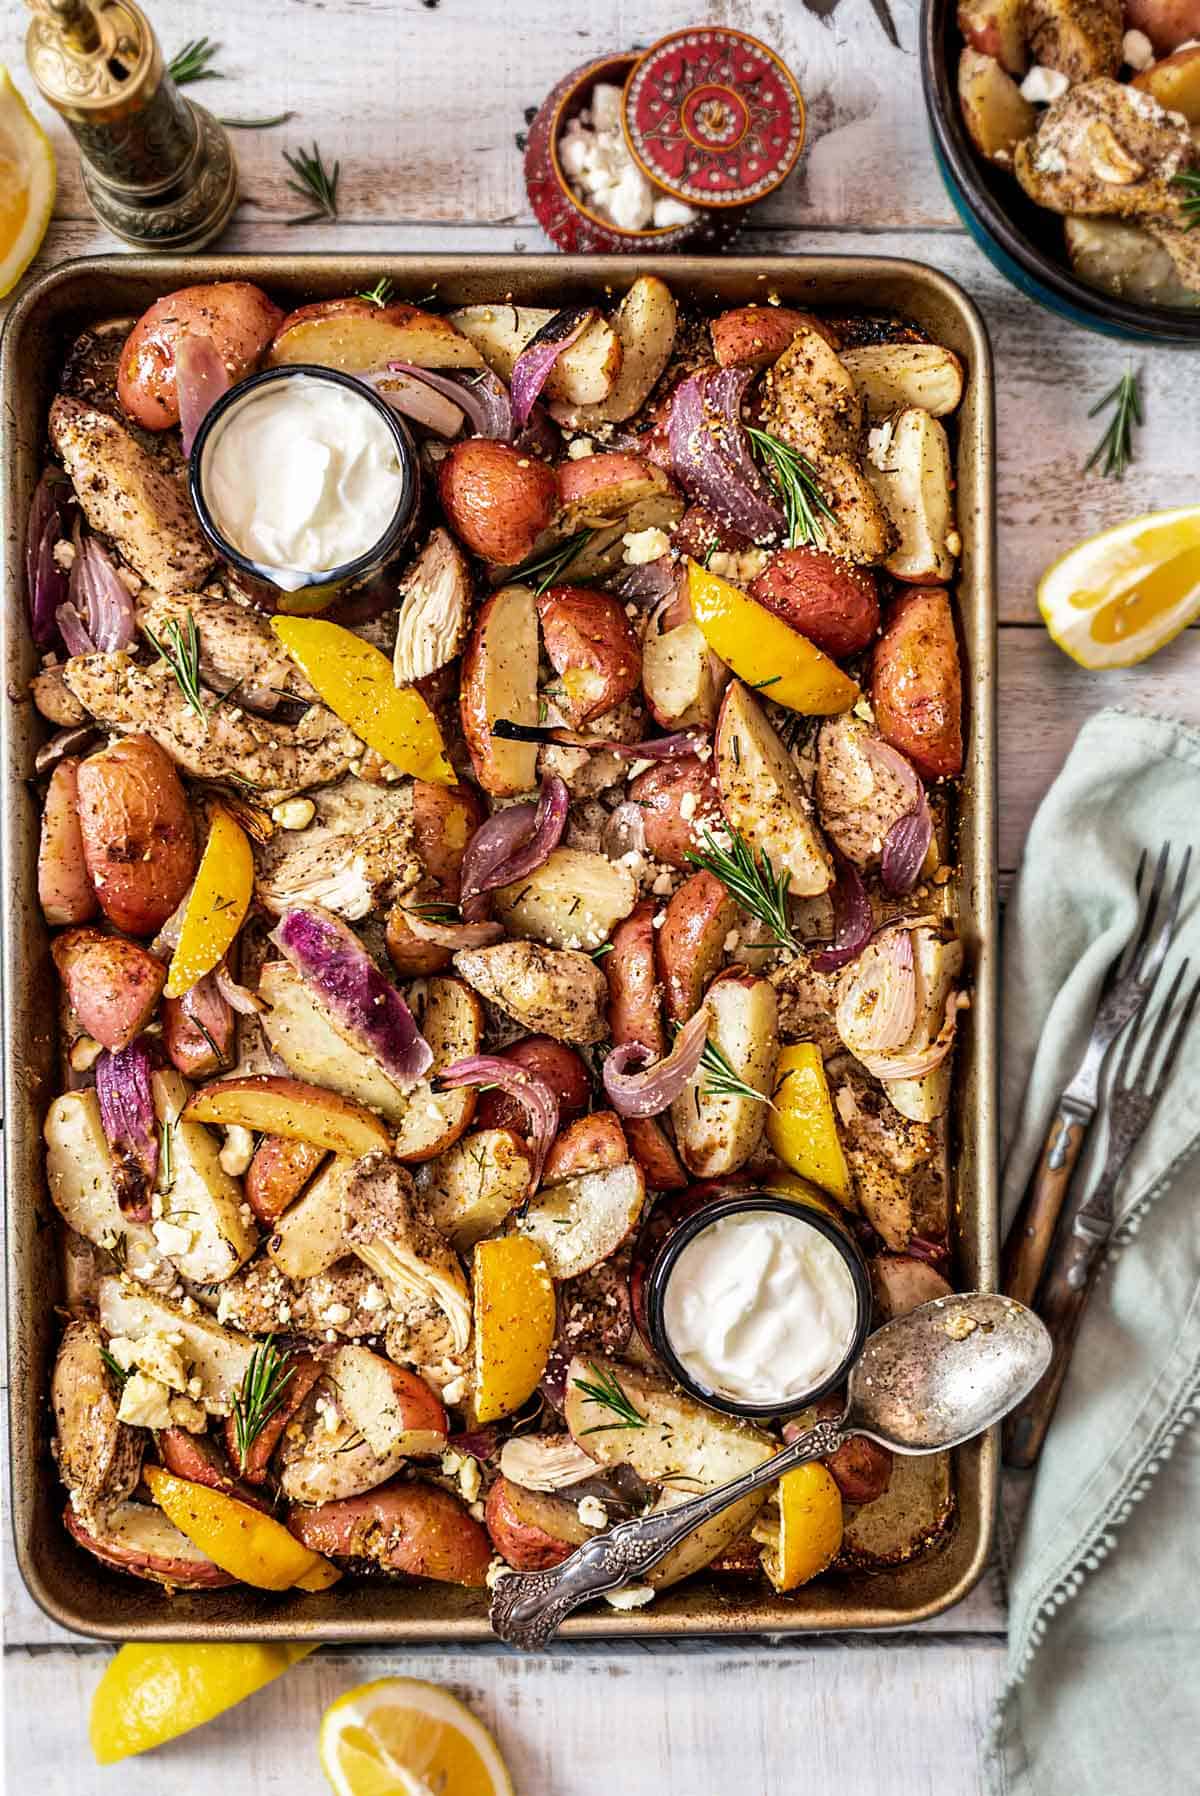 Mediterranean chicken and potato recipe with onions, feta, and tzatziki sauce.